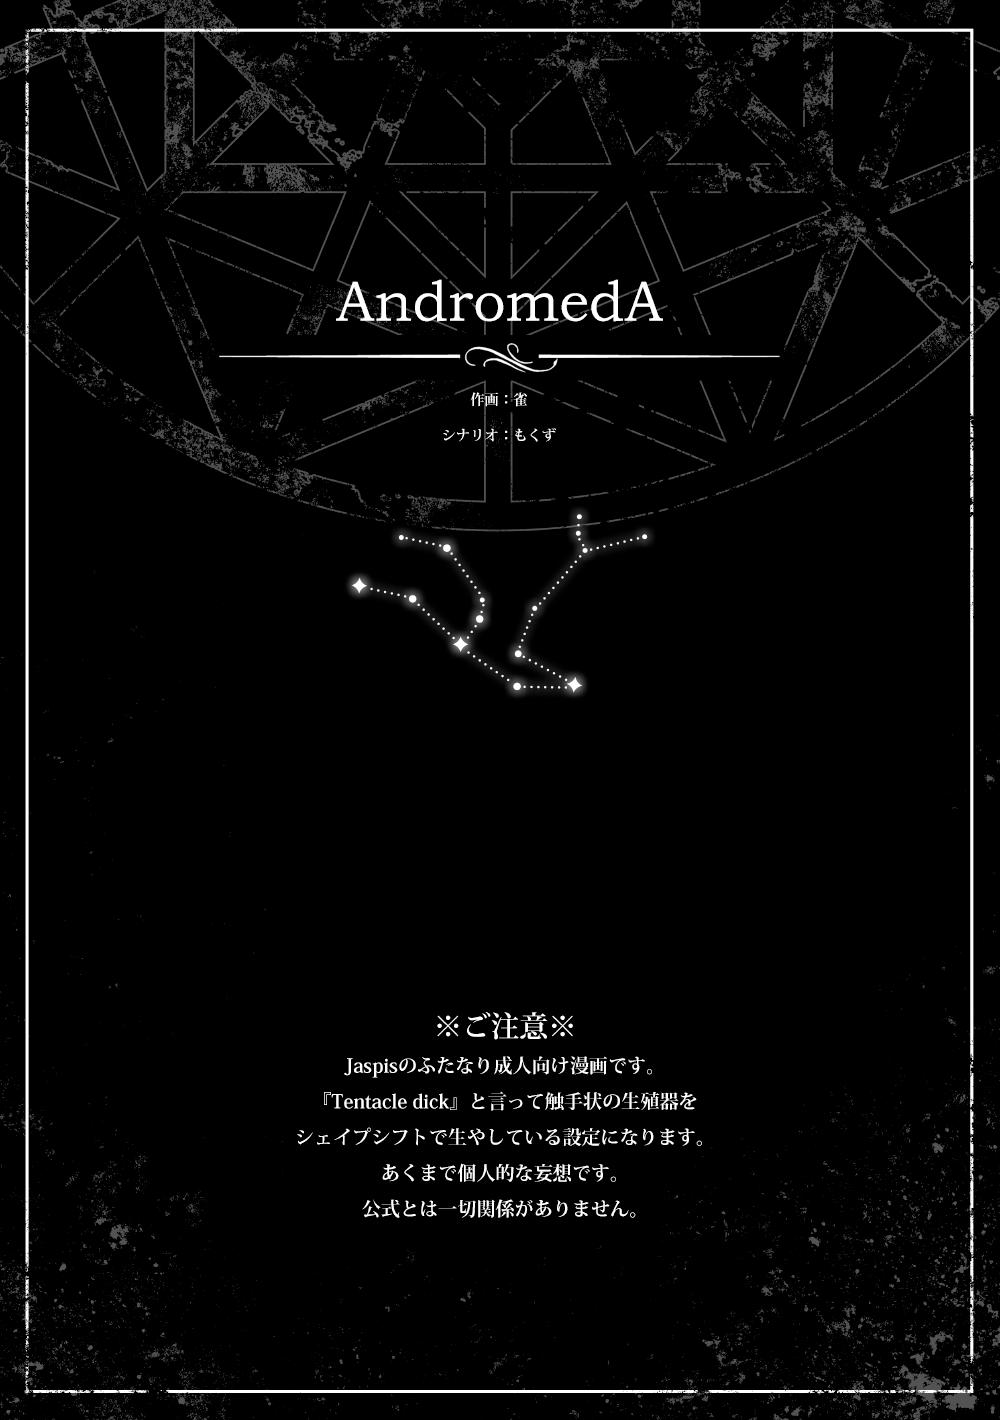 AndromedA 3